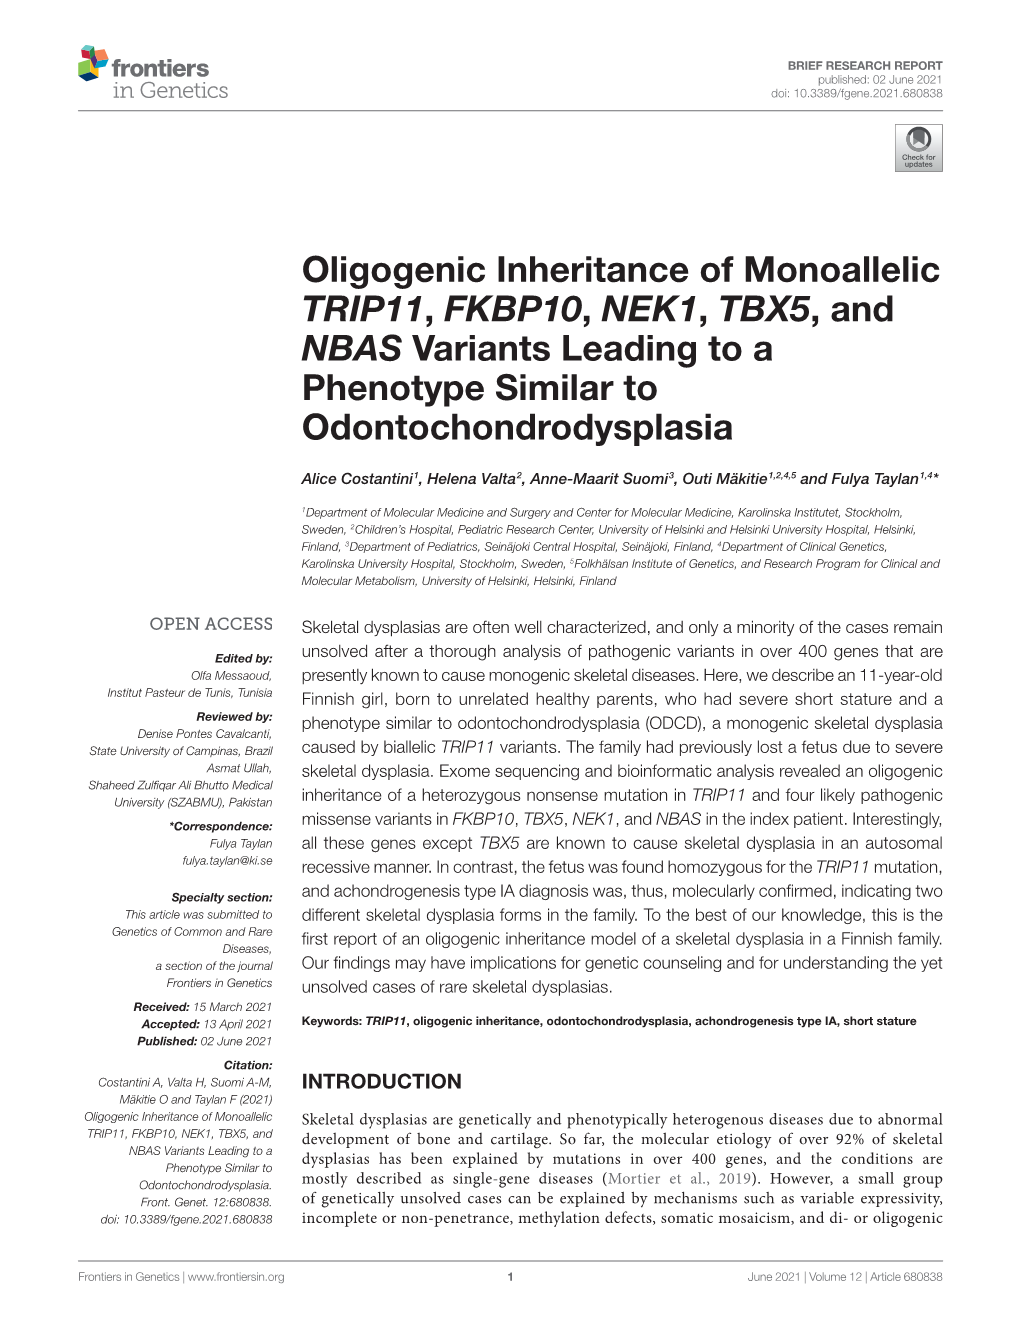 Oligogenic Inheritance of Monoallelic ﻿TRIP11﻿, ﻿FKBP10﻿, ﻿NEK1﻿, ﻿TBX5﻿, And